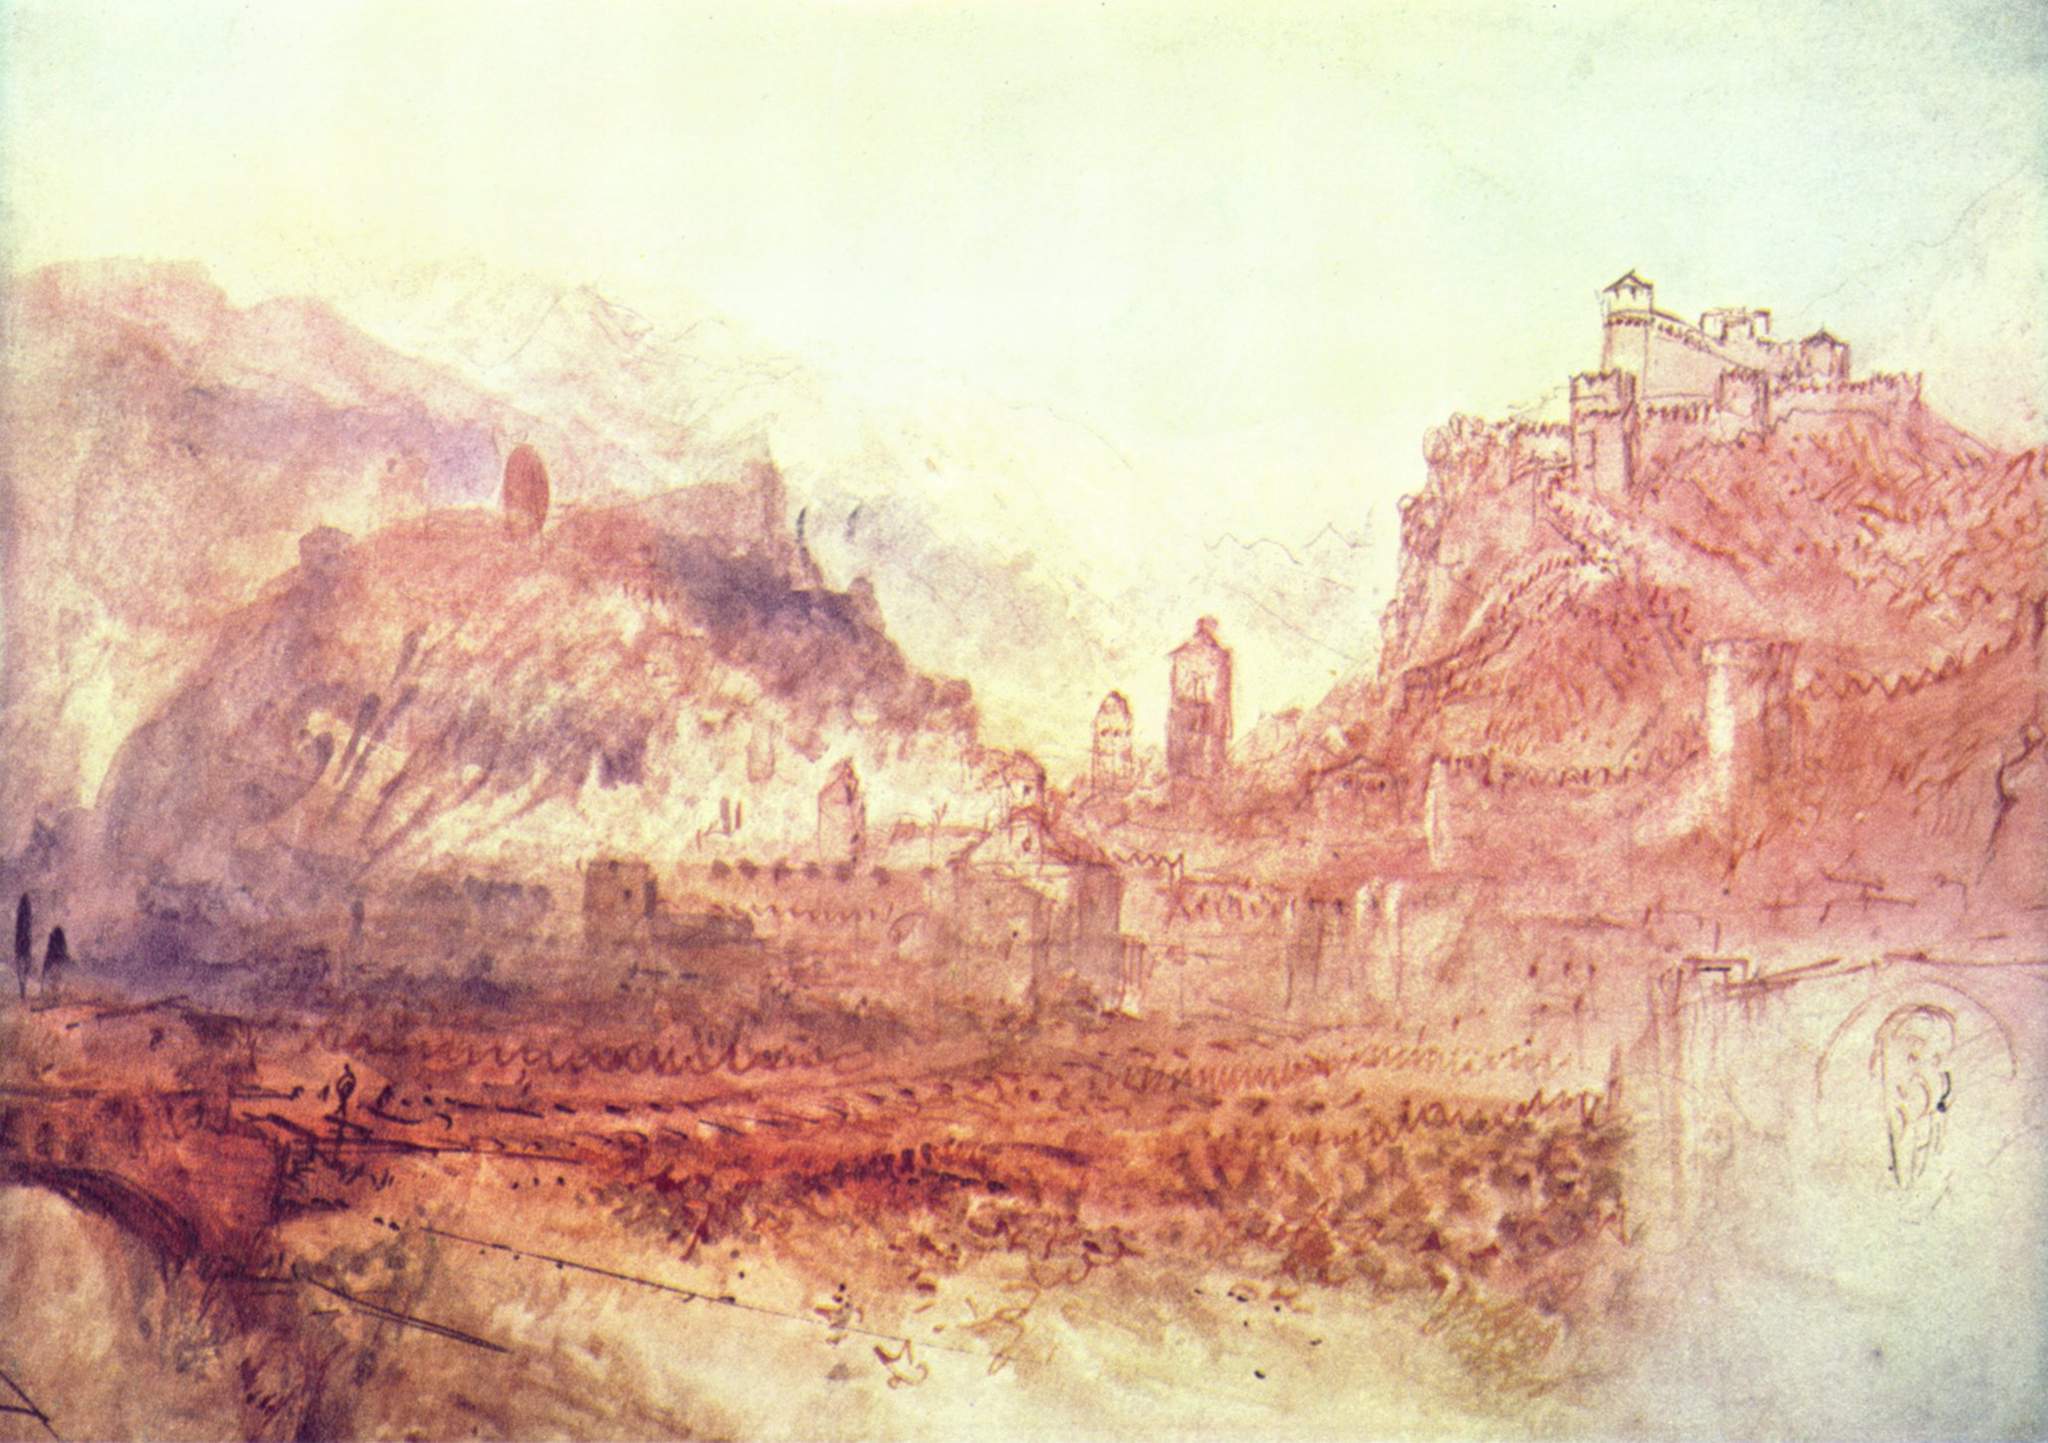 South of Bellinzona (1841).